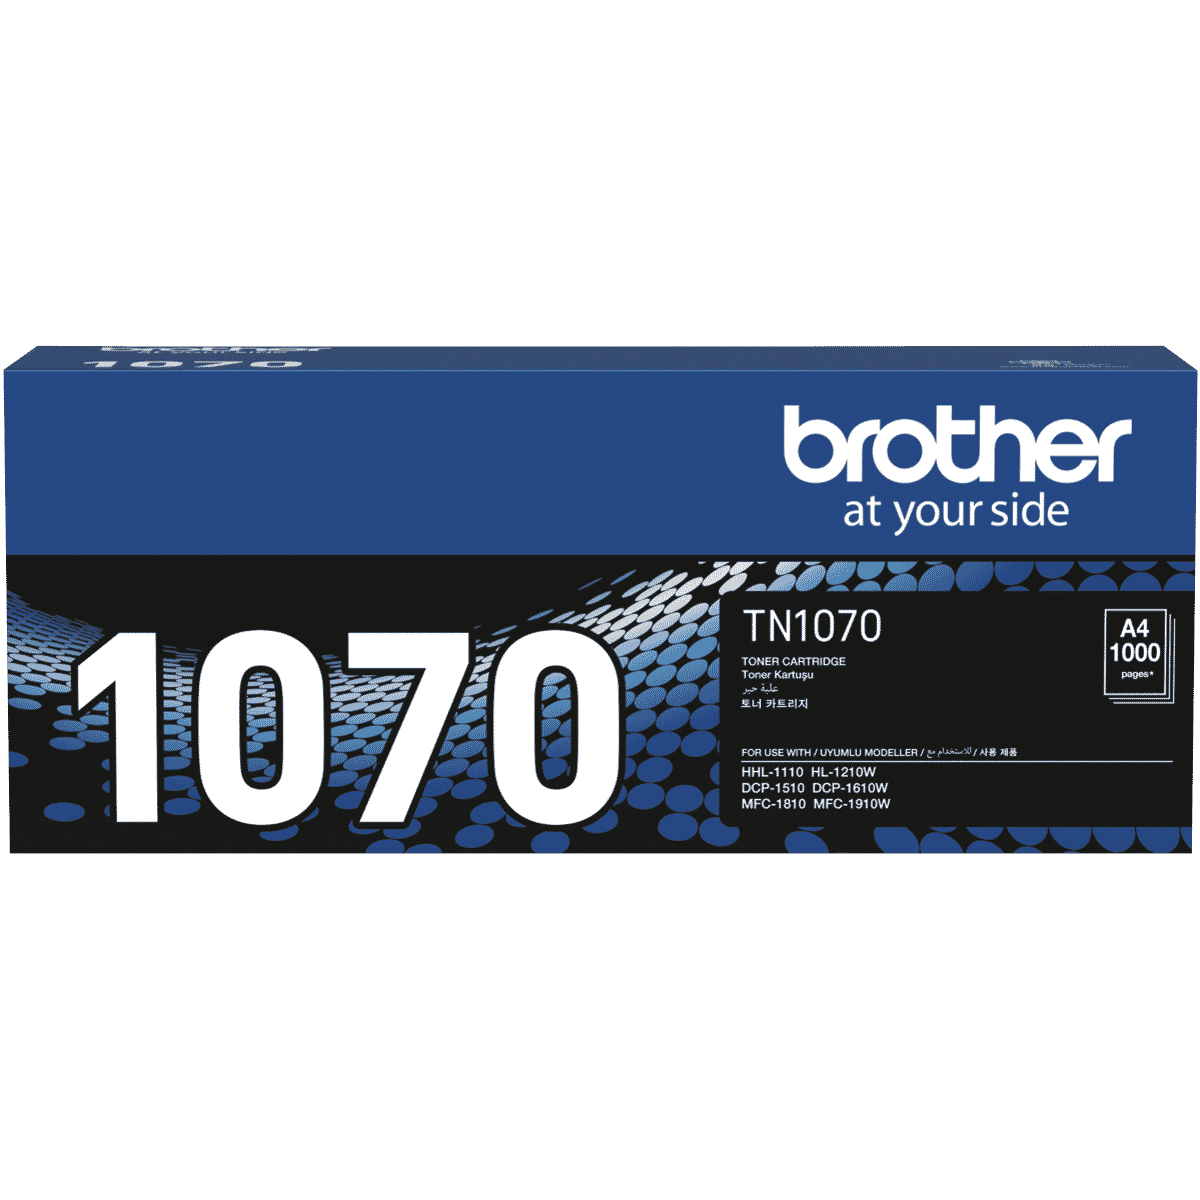 Brother TN-1070 TN-1070 Mono Laser Toner at The Good Guys